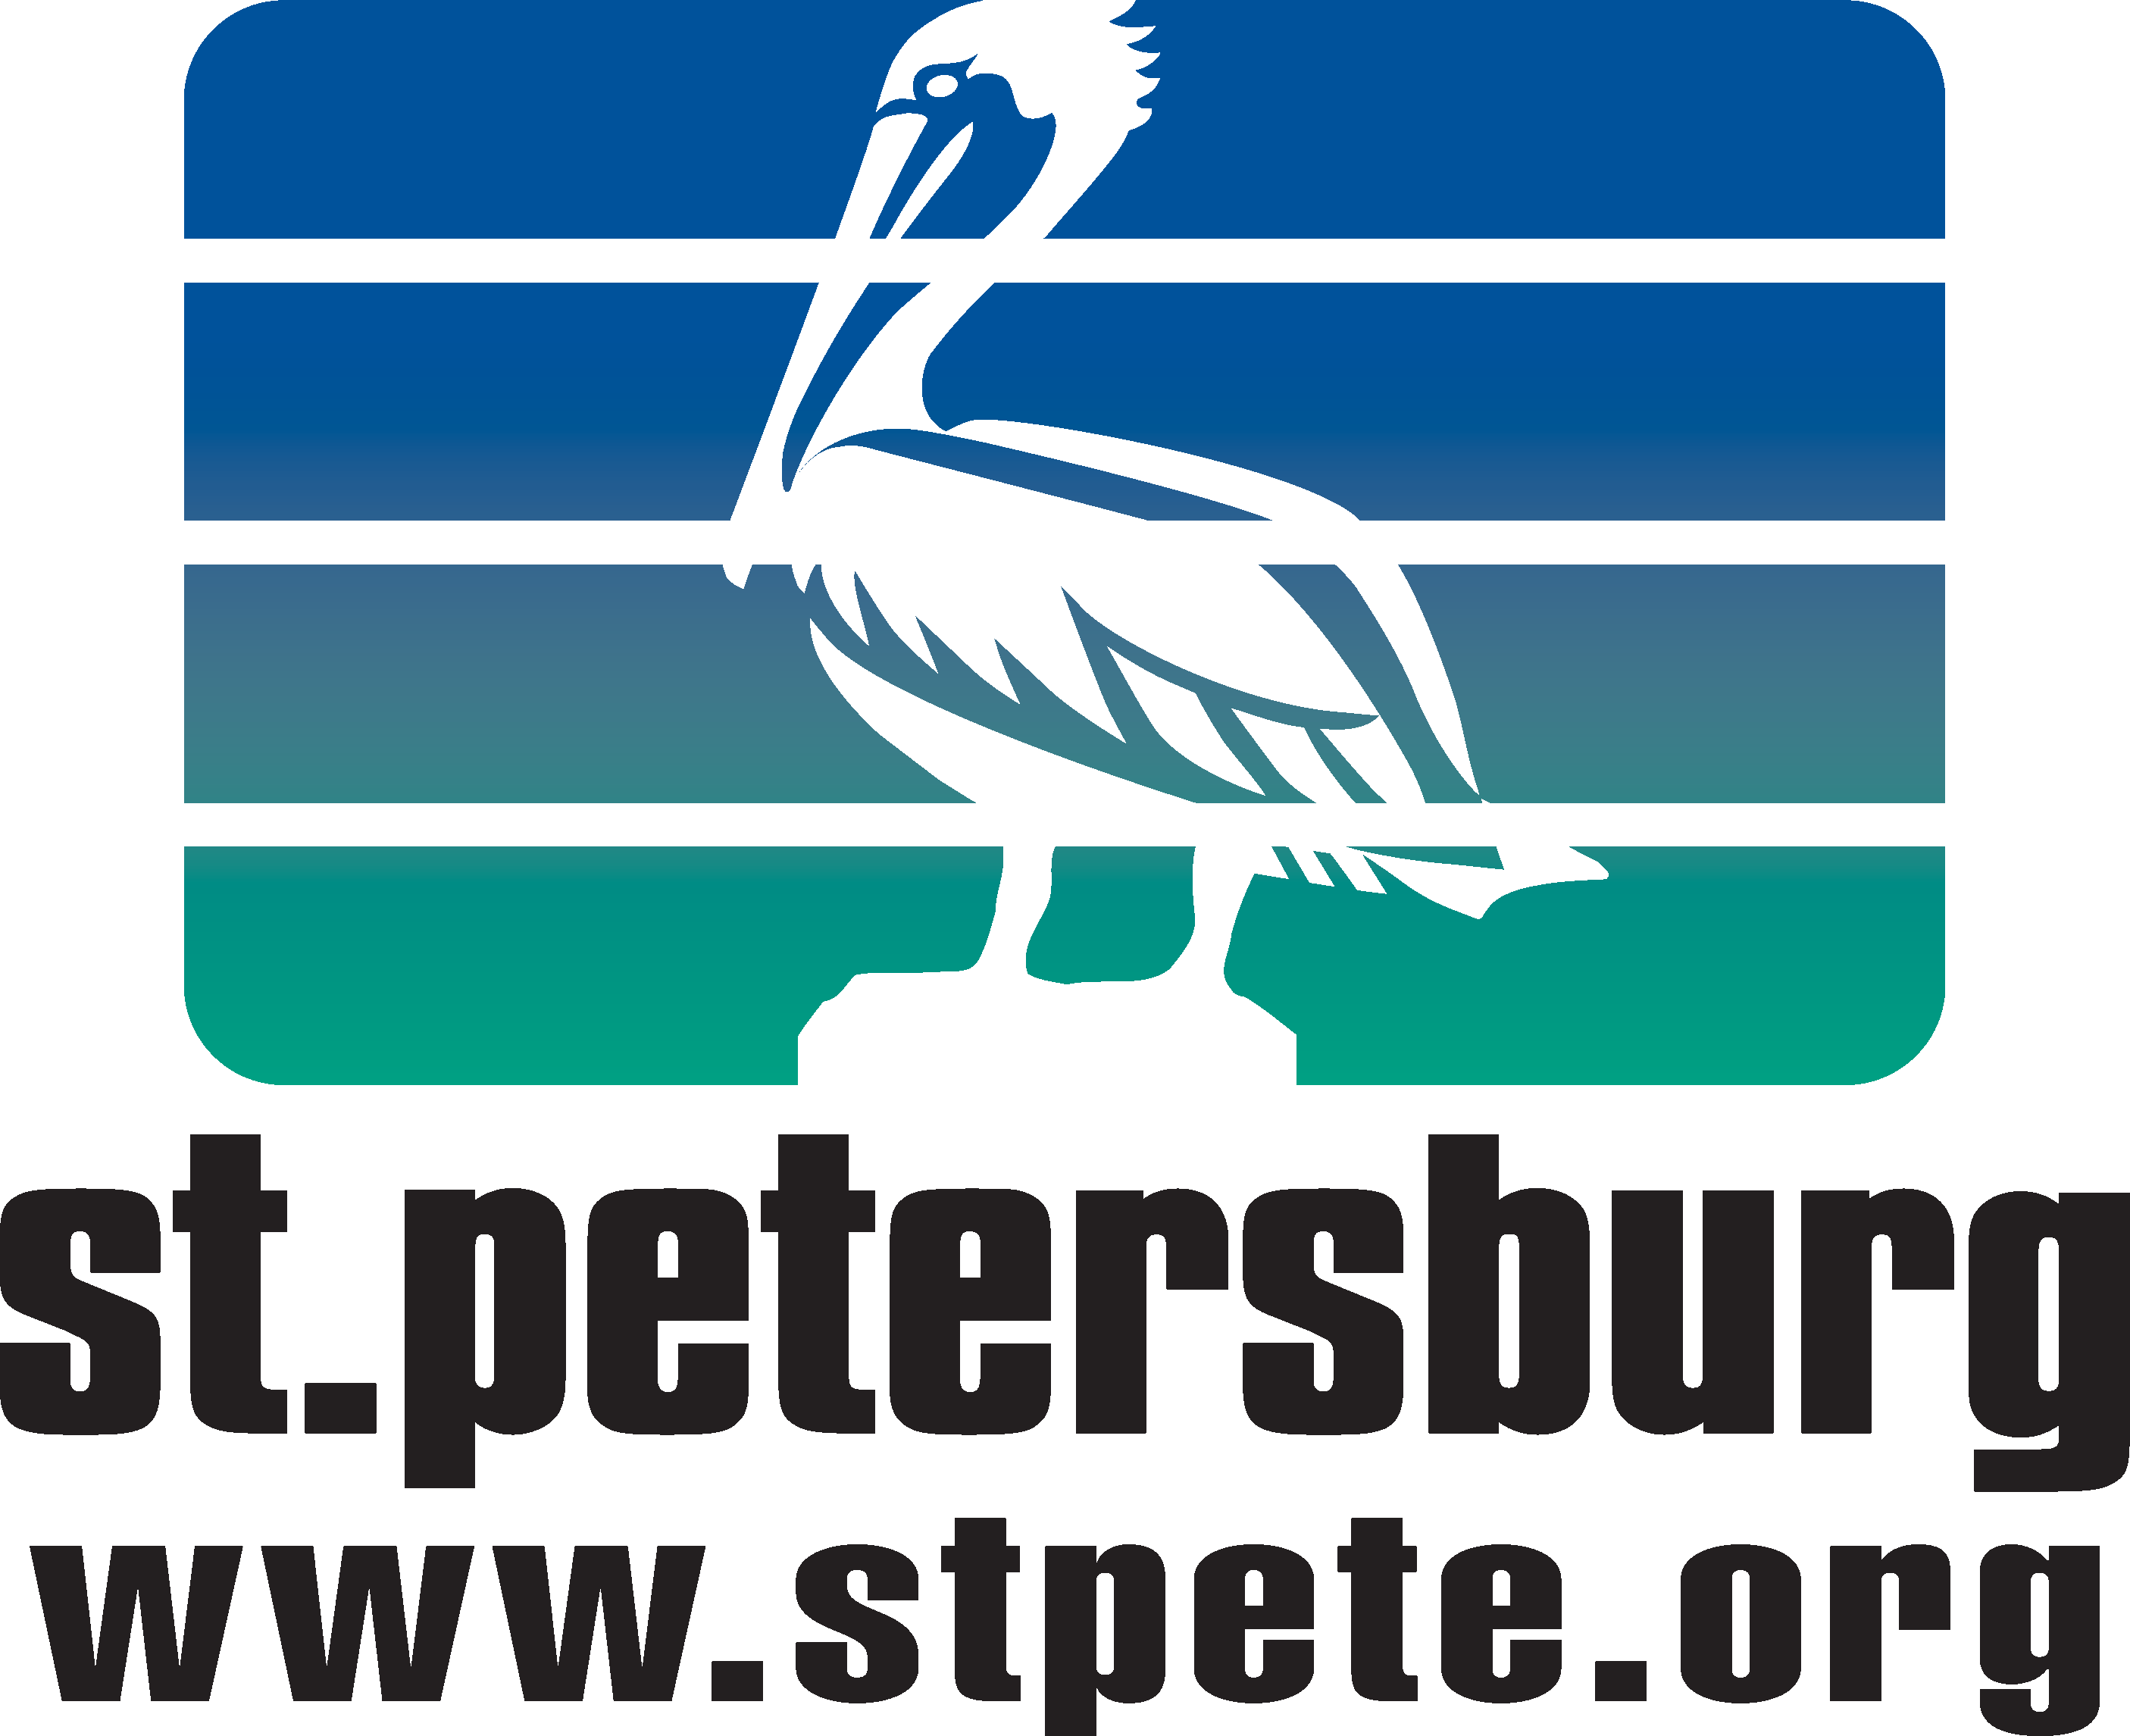 St. Petersburg Logo - File:Logo of St. Petersburg, Florida (2).png - Wikimedia Commons